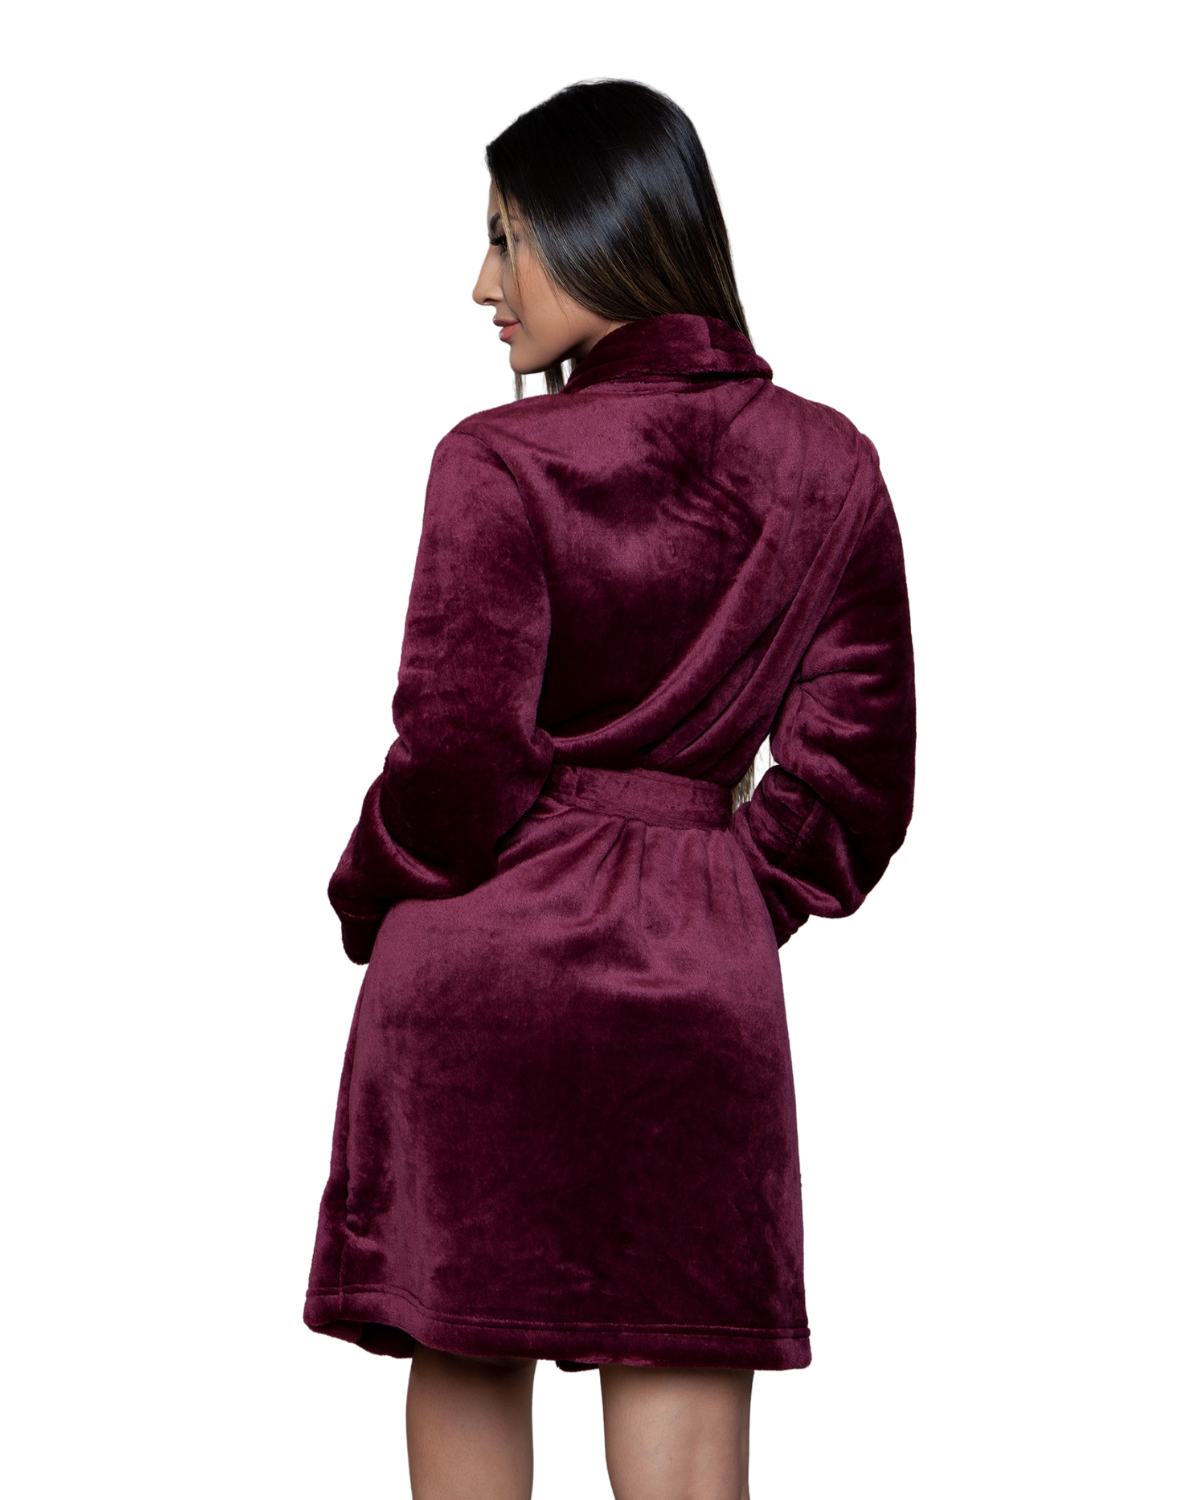 Model wearing a knee length plush robe in maroon